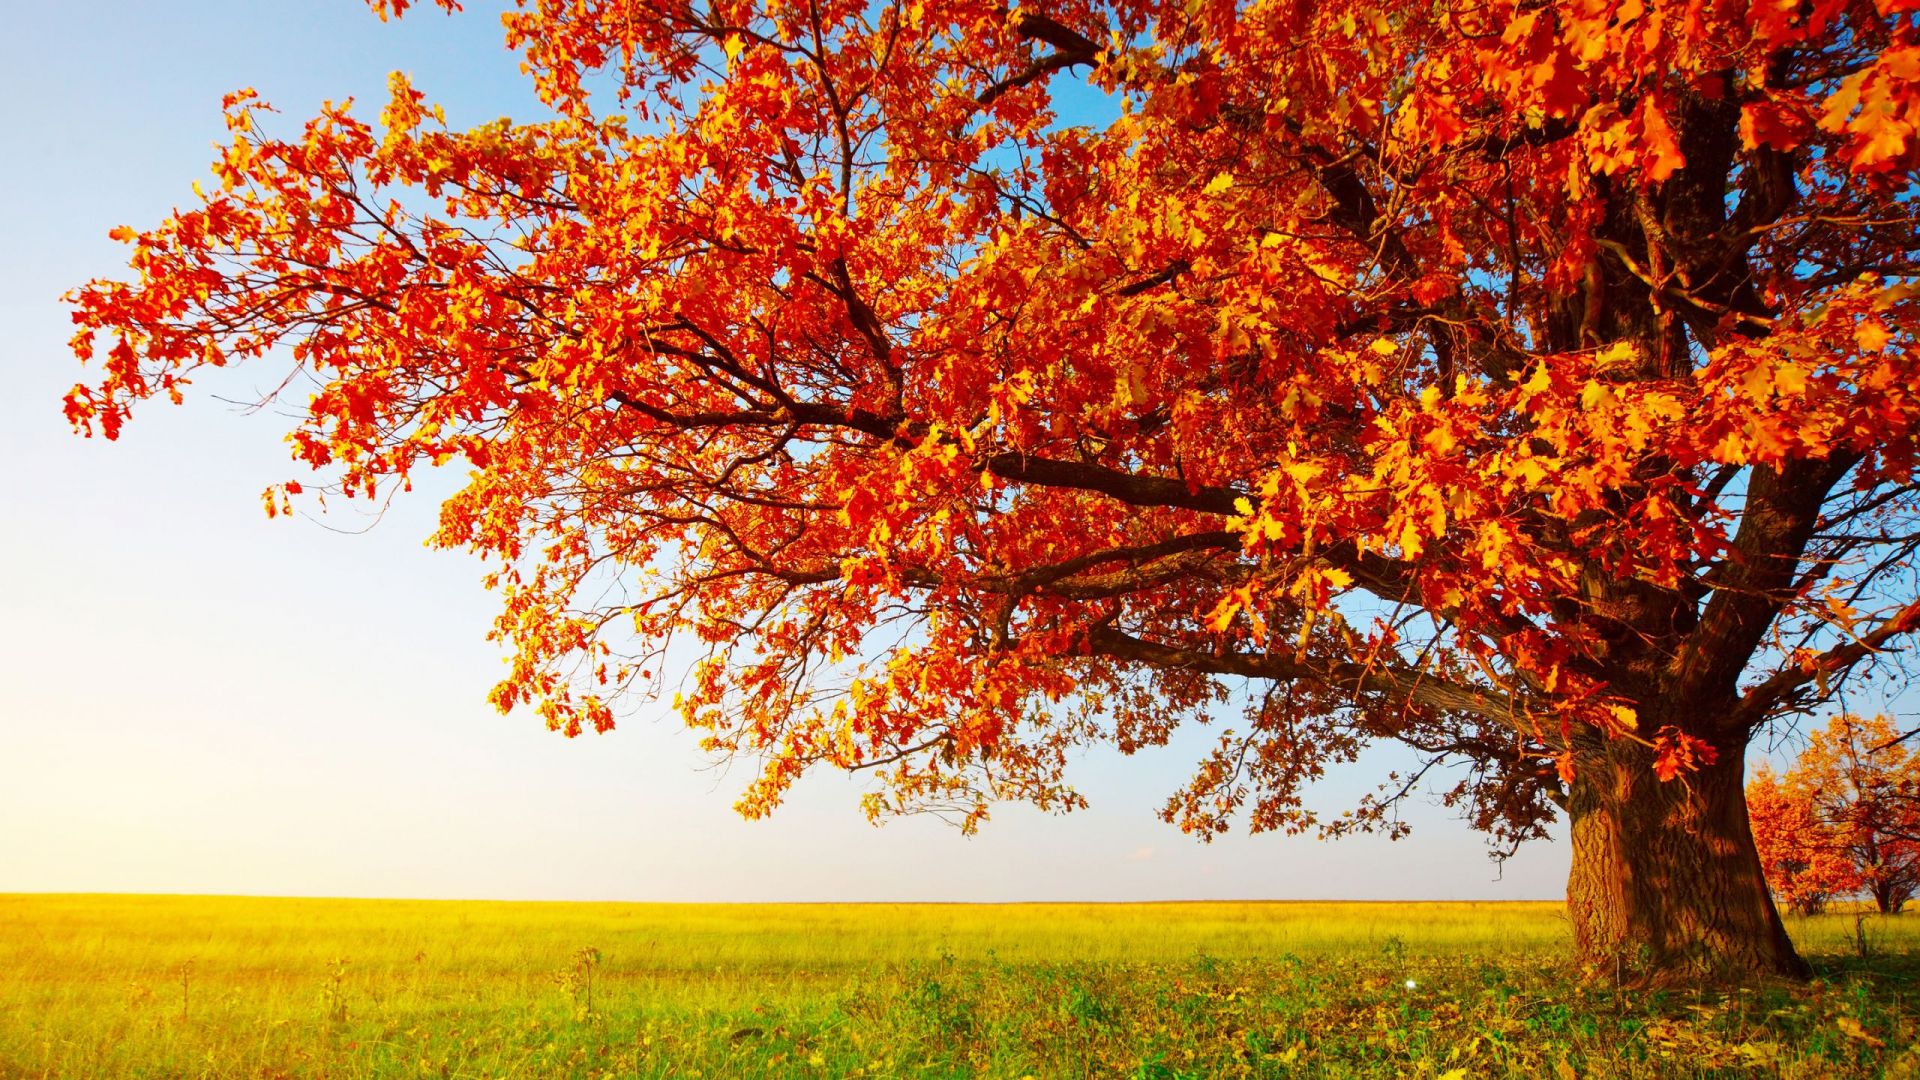 Autumn Season - Nature's Seasons Photo (36241704) - Fanpop